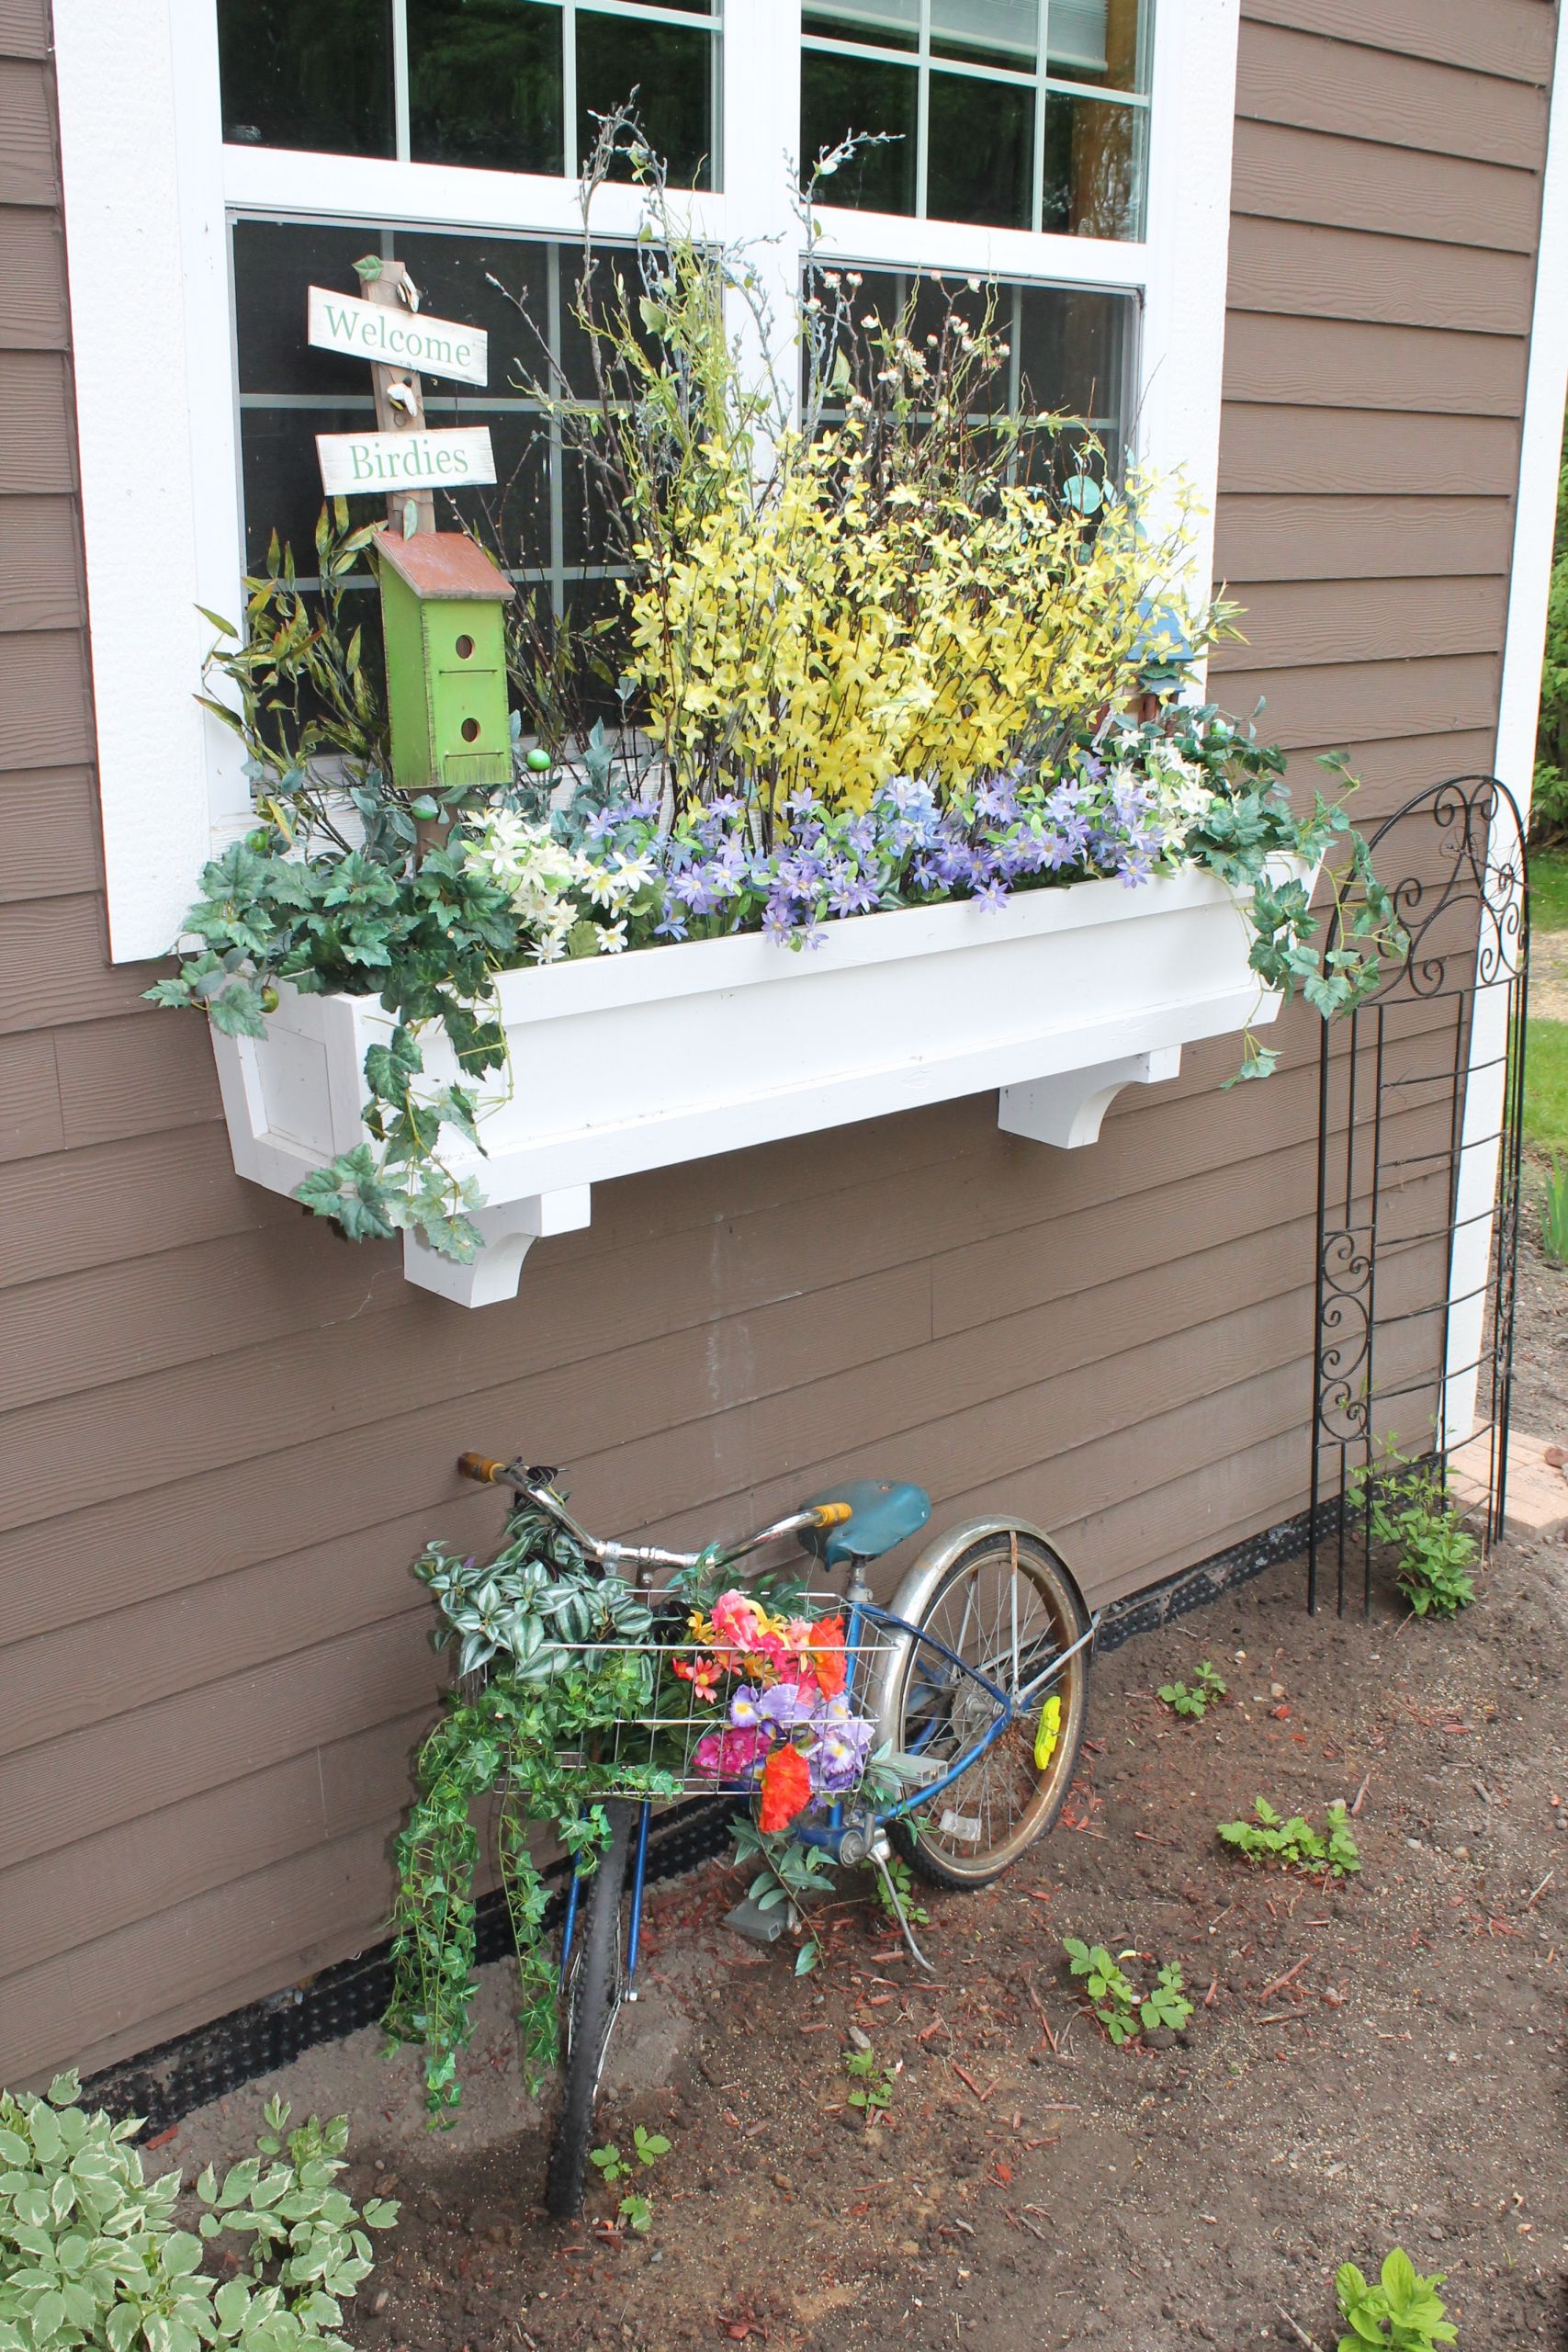 DIY Window Box Planters
 Remodelaholic